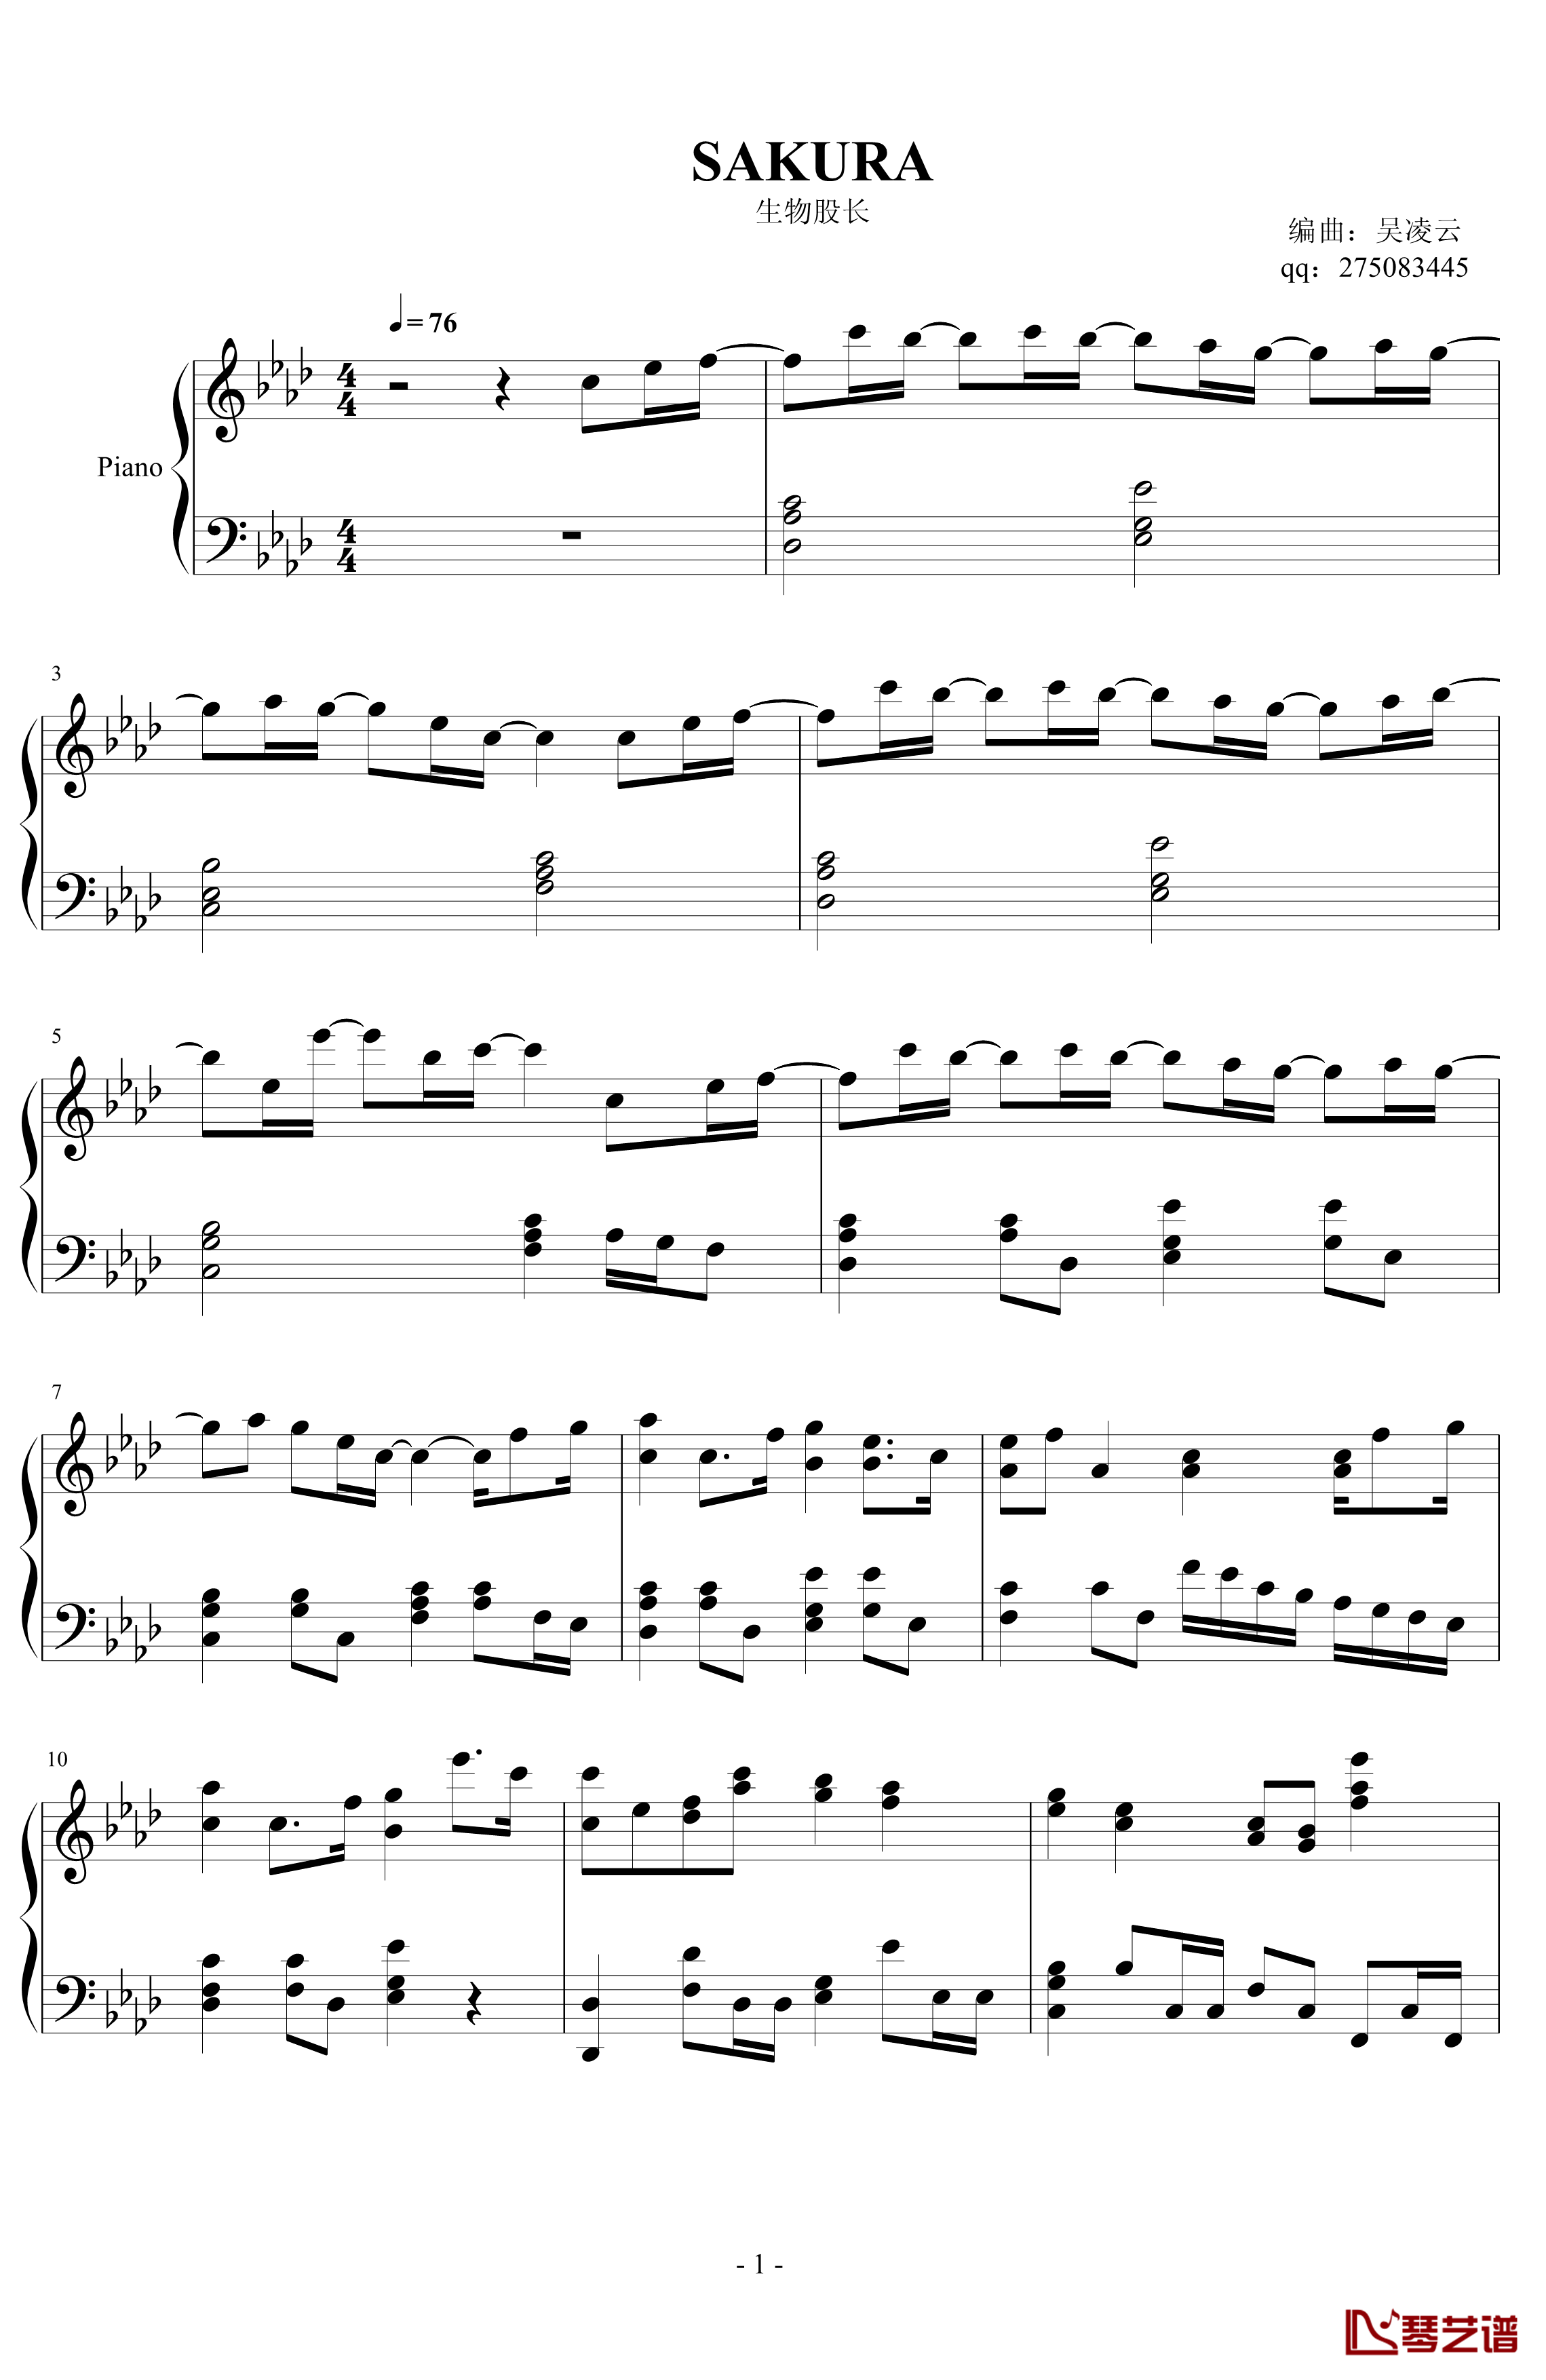 SAKURA钢琴谱-非常好听一首曲子-生物股长1